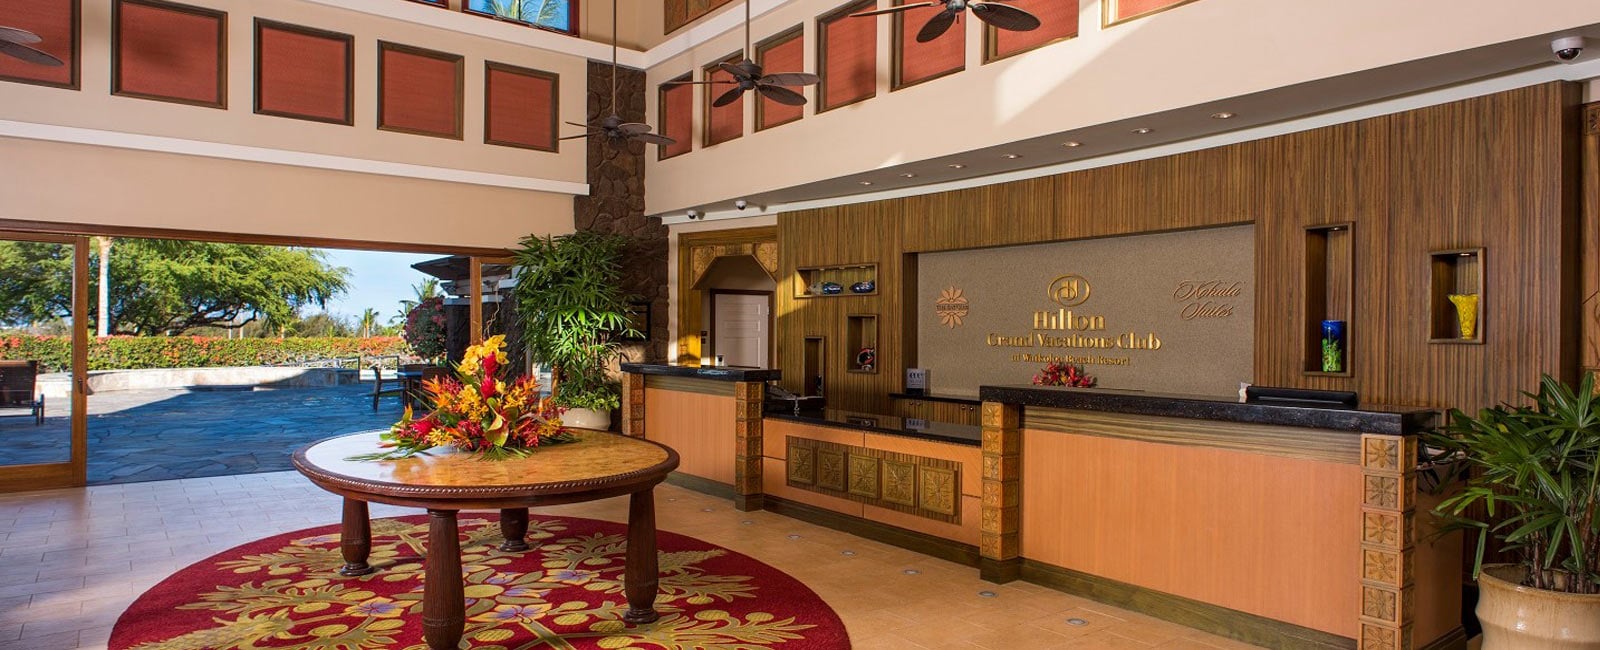 Lobby of Kohala Suites in Waikoloa, Hawaii